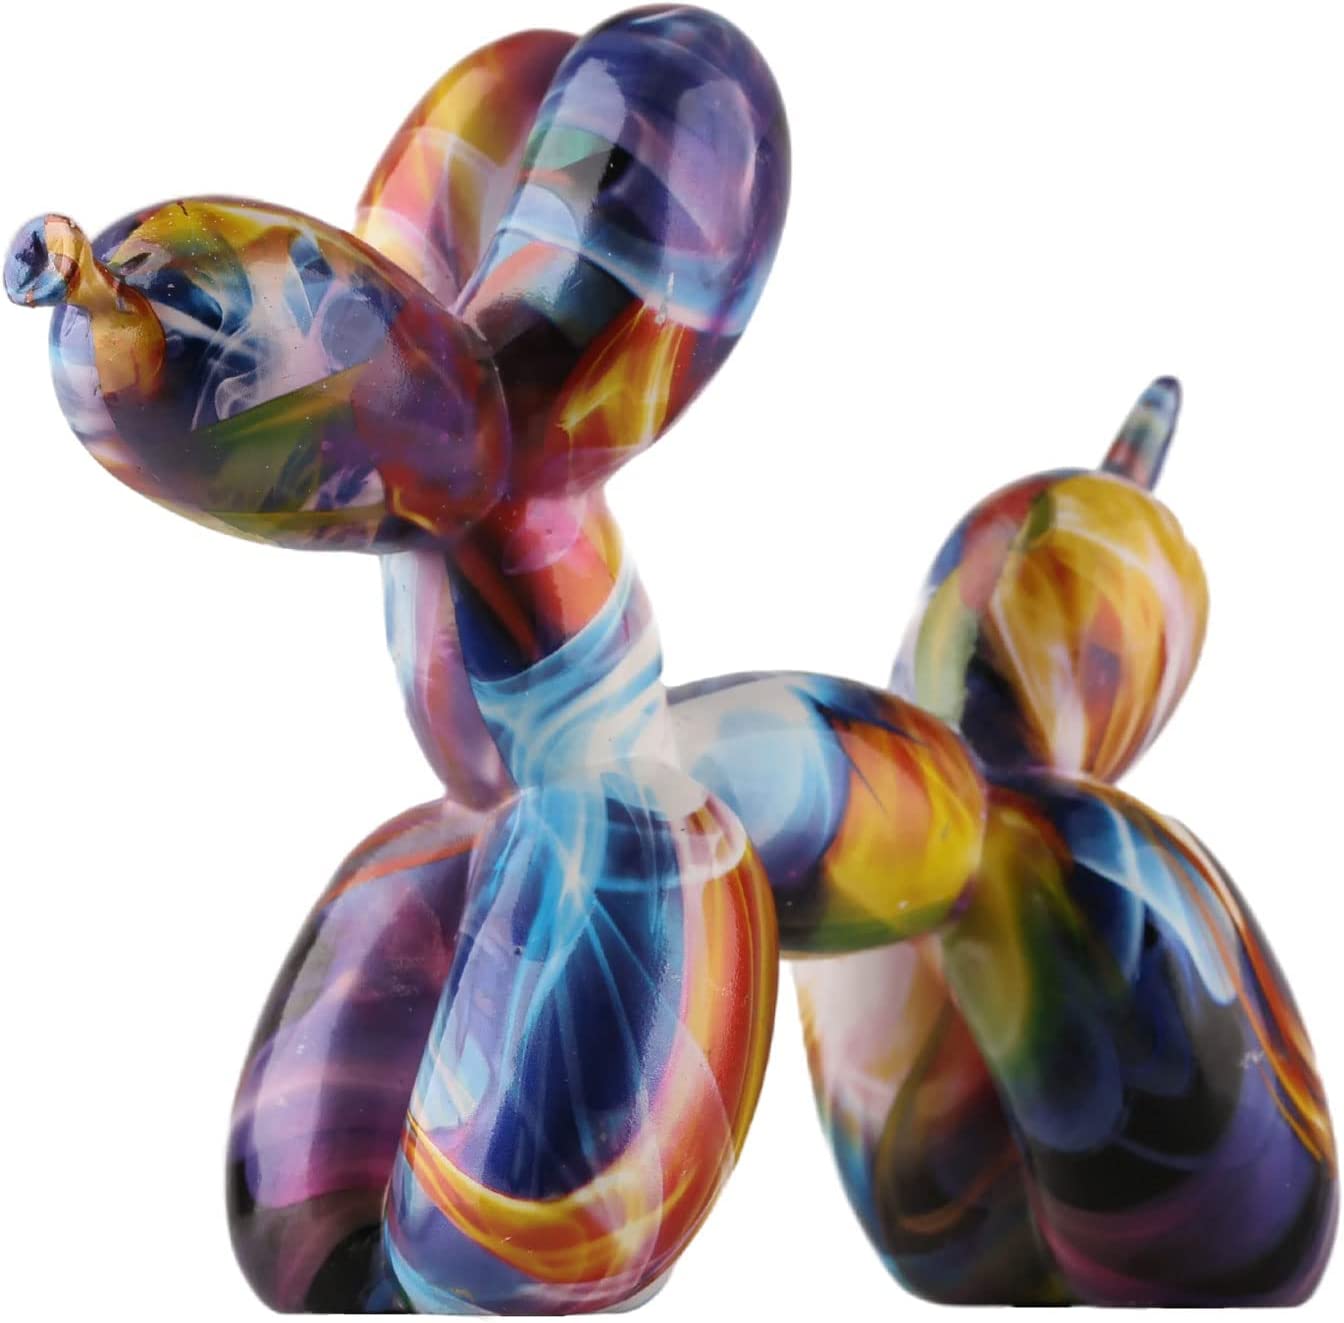 Modern Color Art Balloon Dog Sculpture Desktop Dog Statue - Home Decor Gifts and More